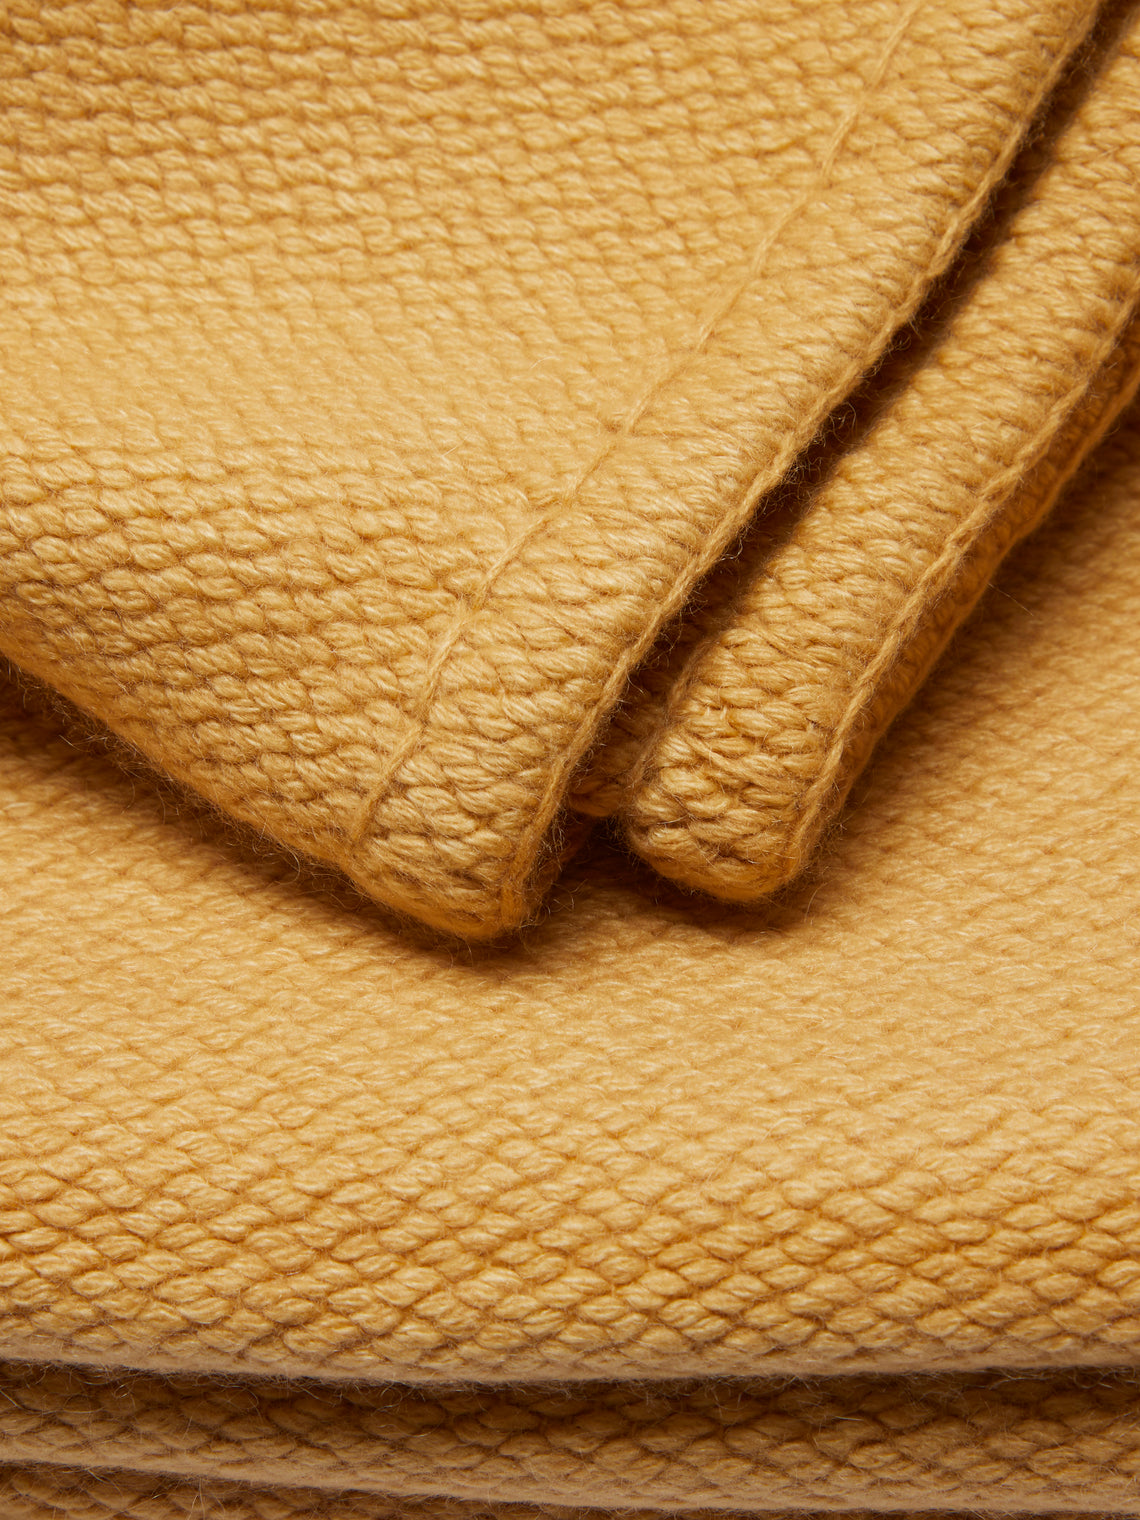 Rose Uniacke - Hand-Dyed Cashmere Large Blanket - Gold - ABASK